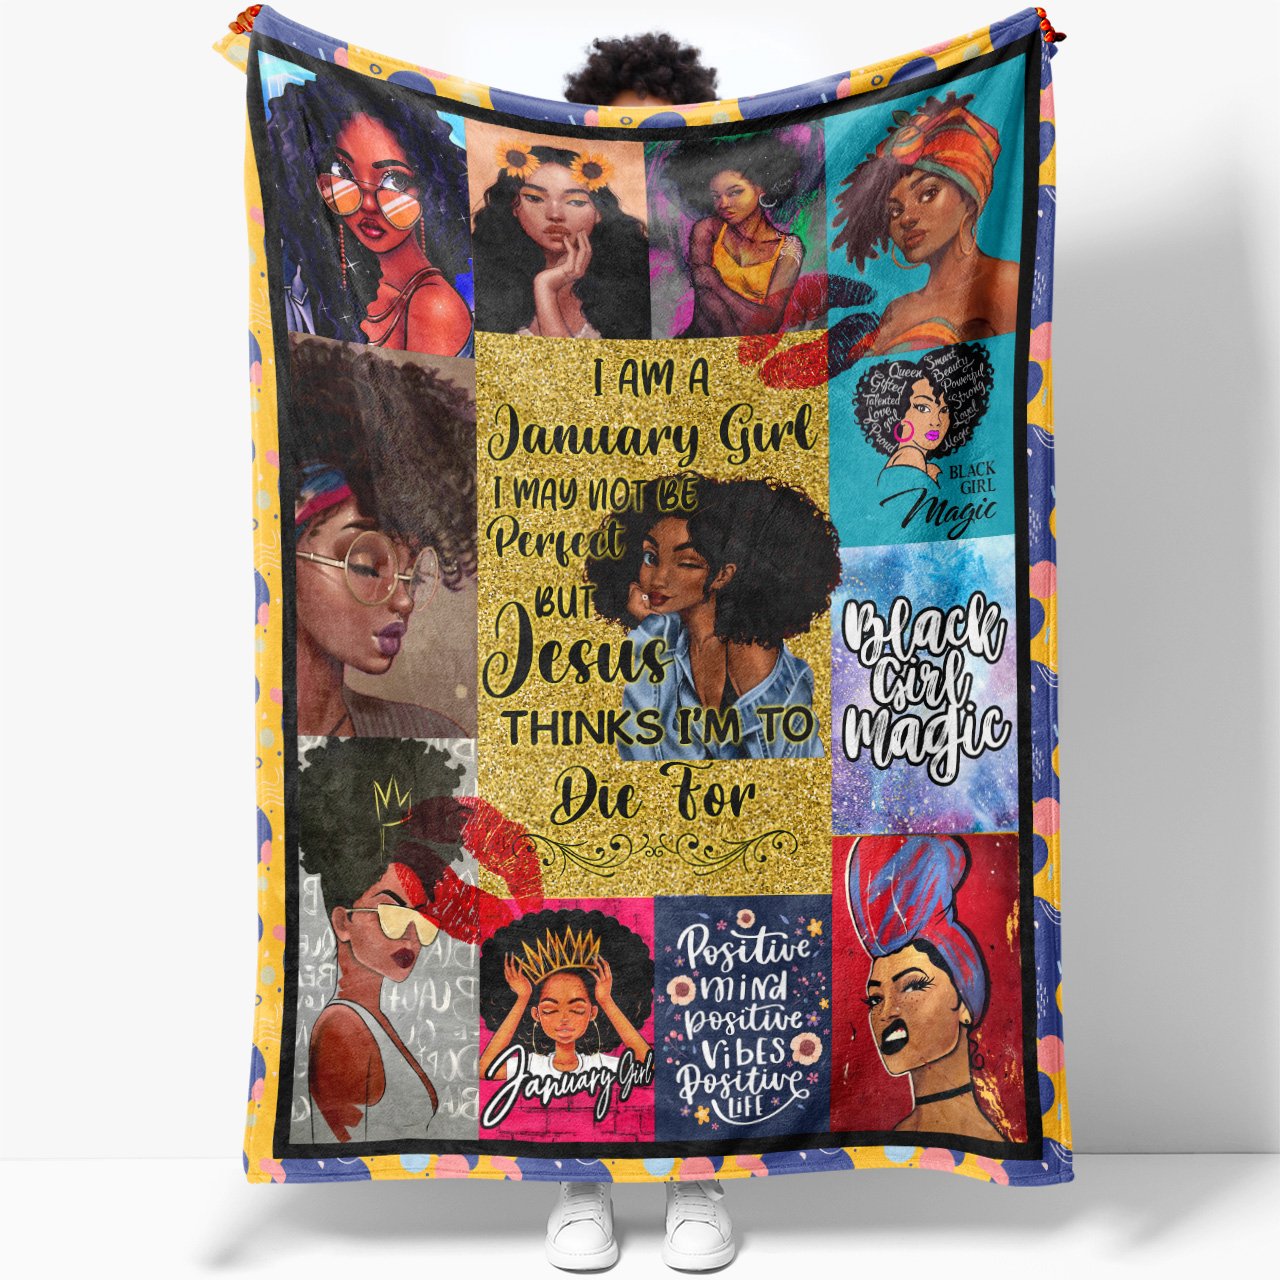 Blanket Birthday Gift Ideas For January Black Girl, Black Girl Magic, Not Be Perfect But Jesus Thinks I'm to Blanket for Black Daughter